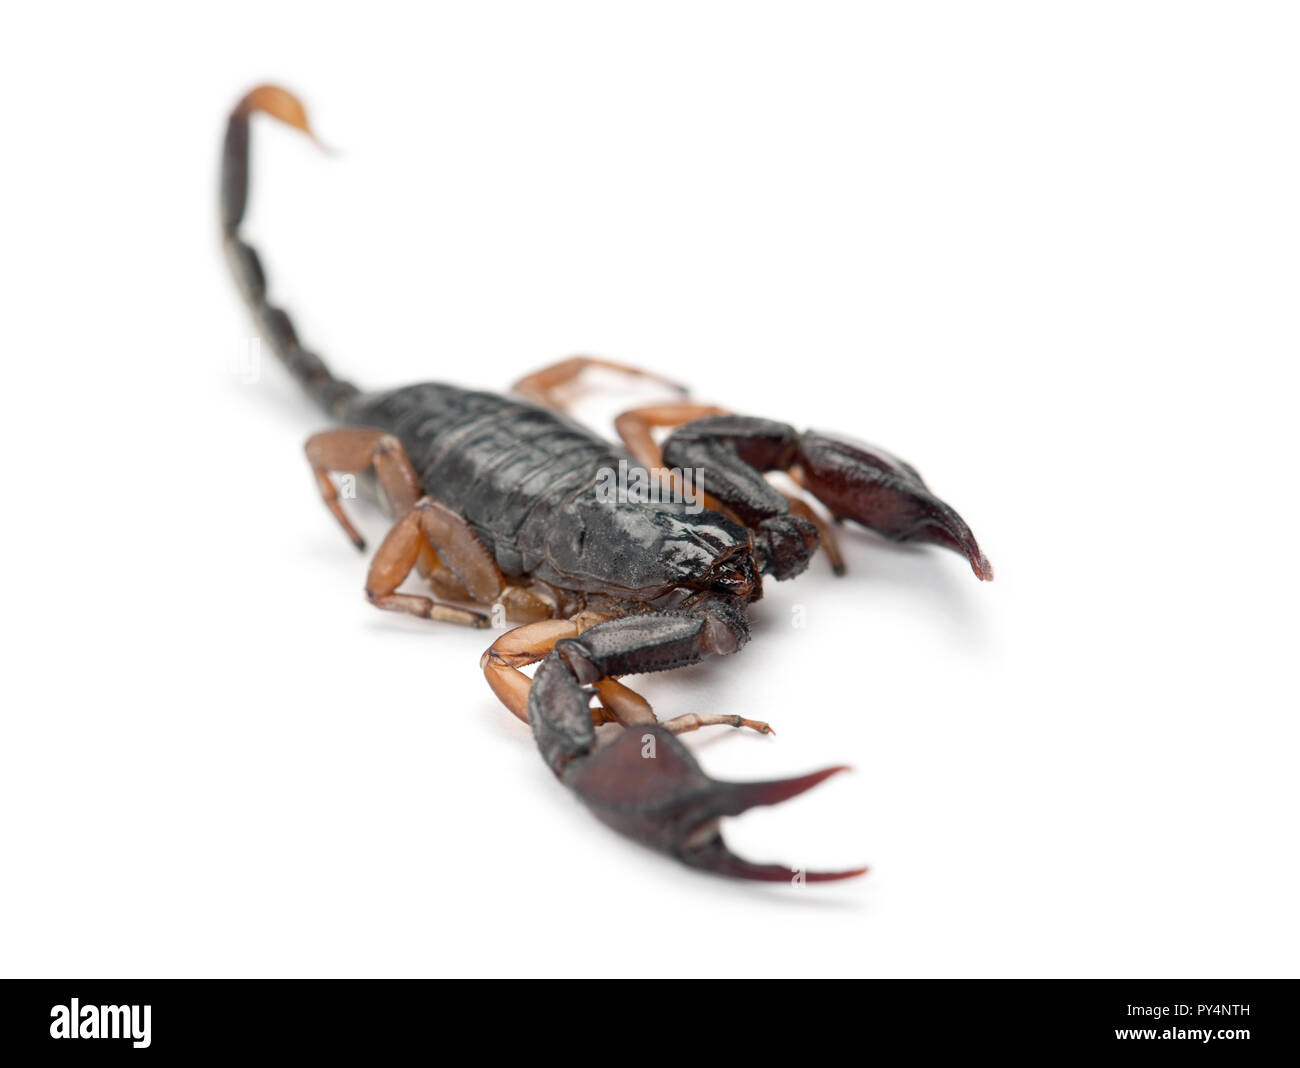 Unión Yellow-Tailed Scorpion, Euscorpius flavicaudis, contra el fondo blanco. Foto de stock